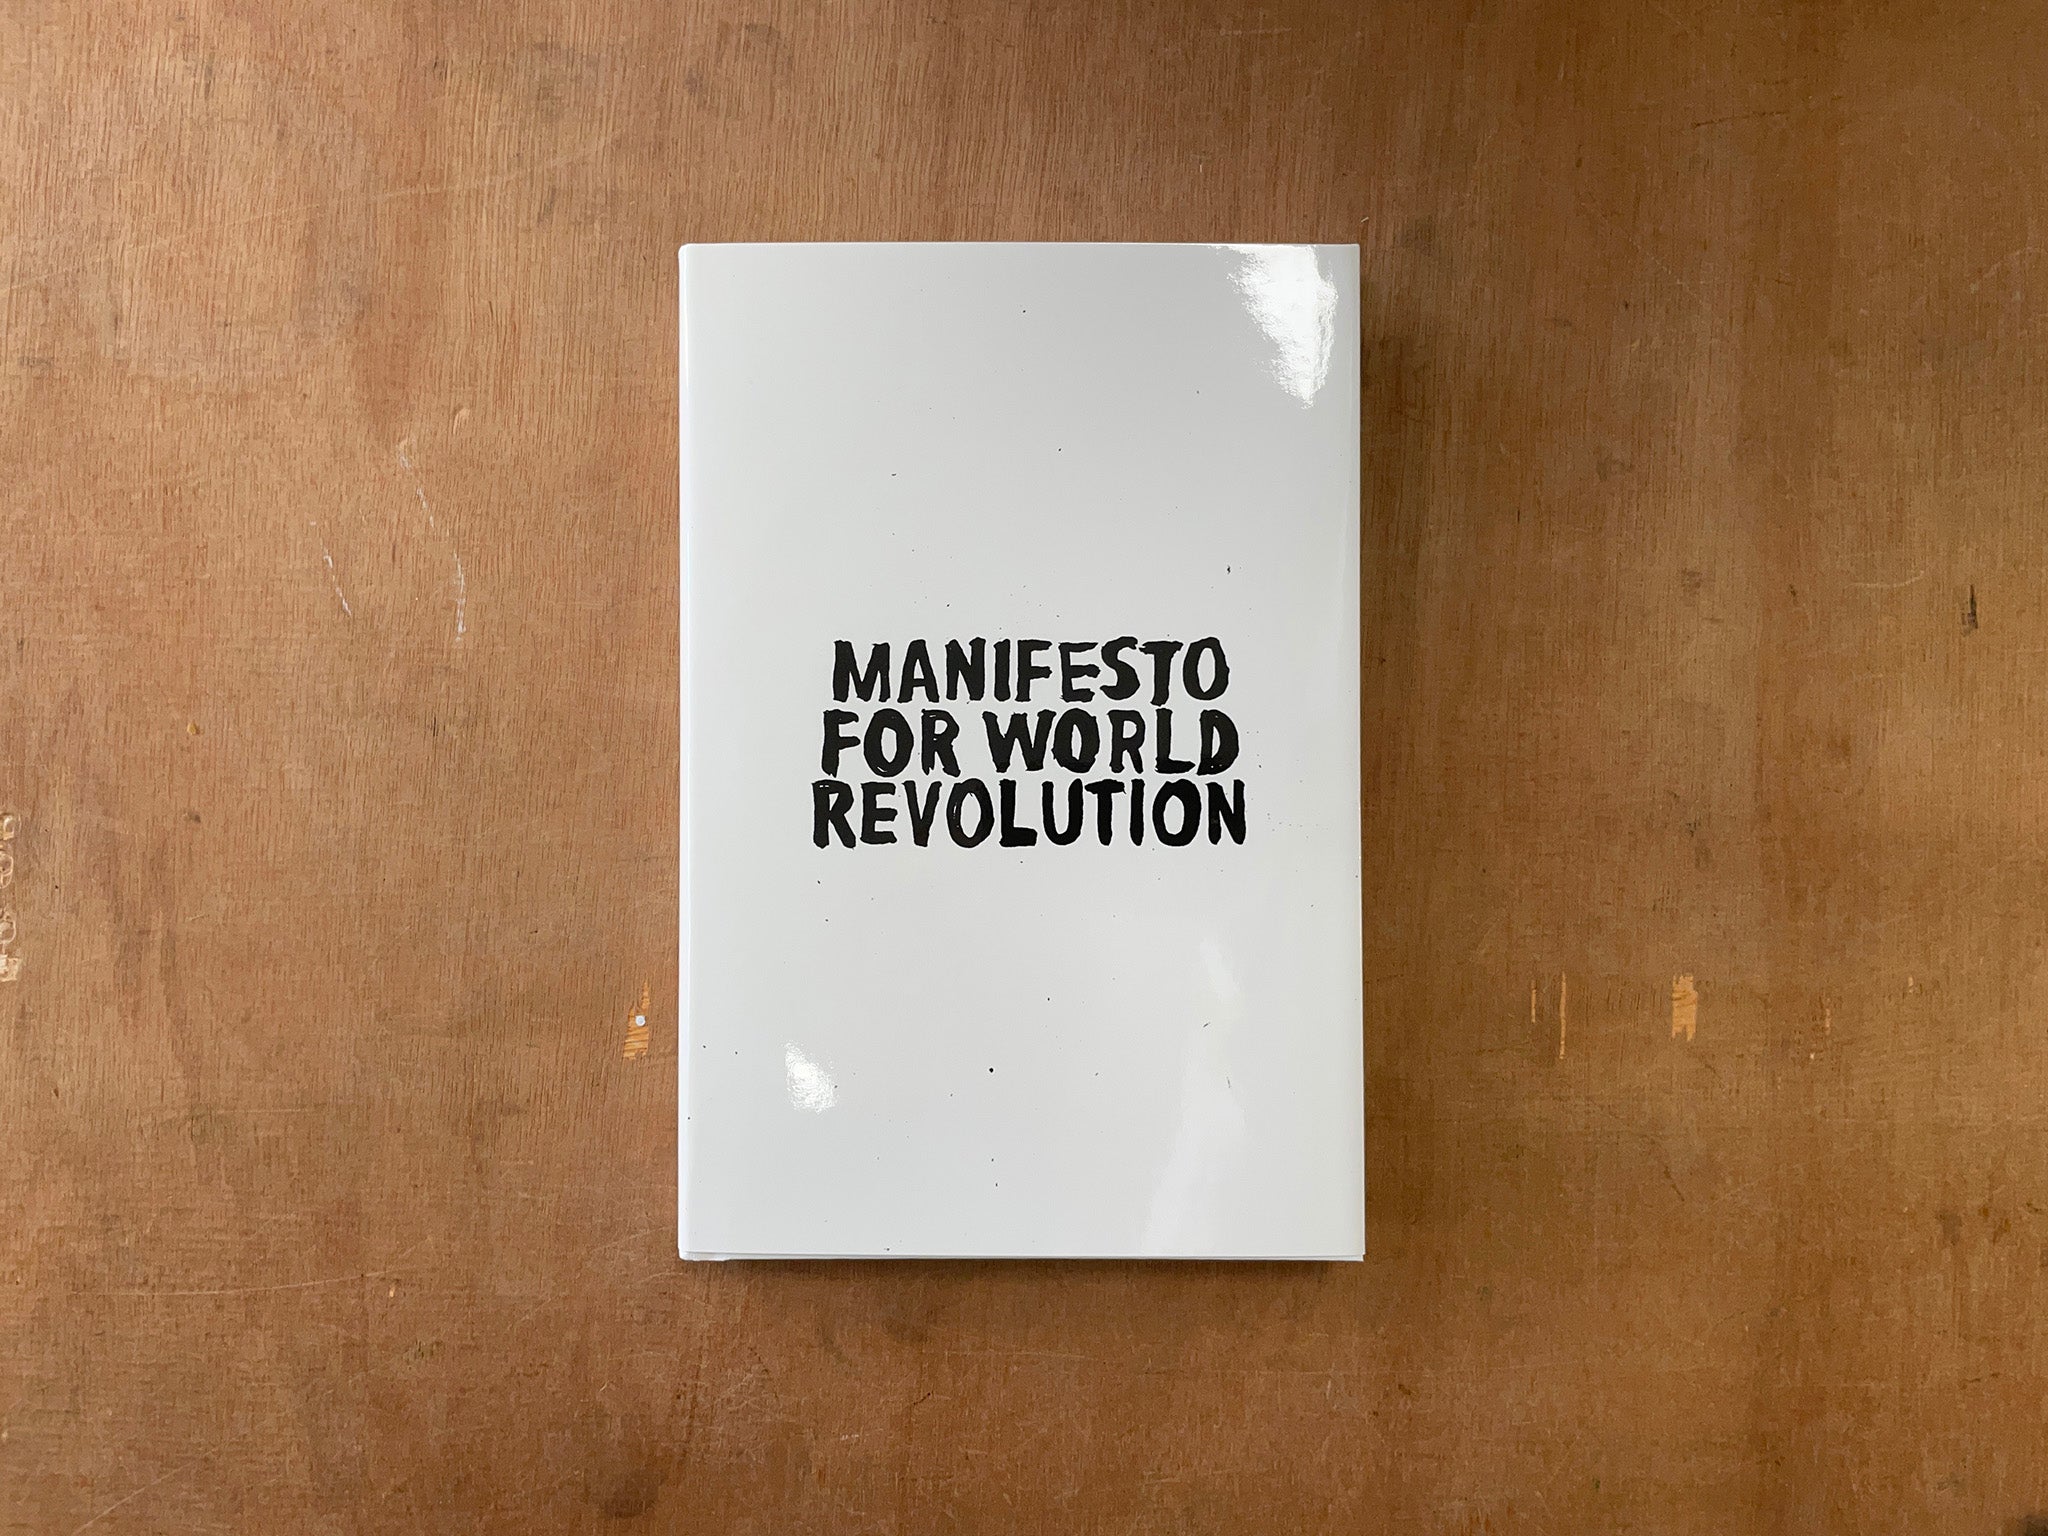 A MANIFESTO FOR WORLD REVOLUTION by Kalle Lasn